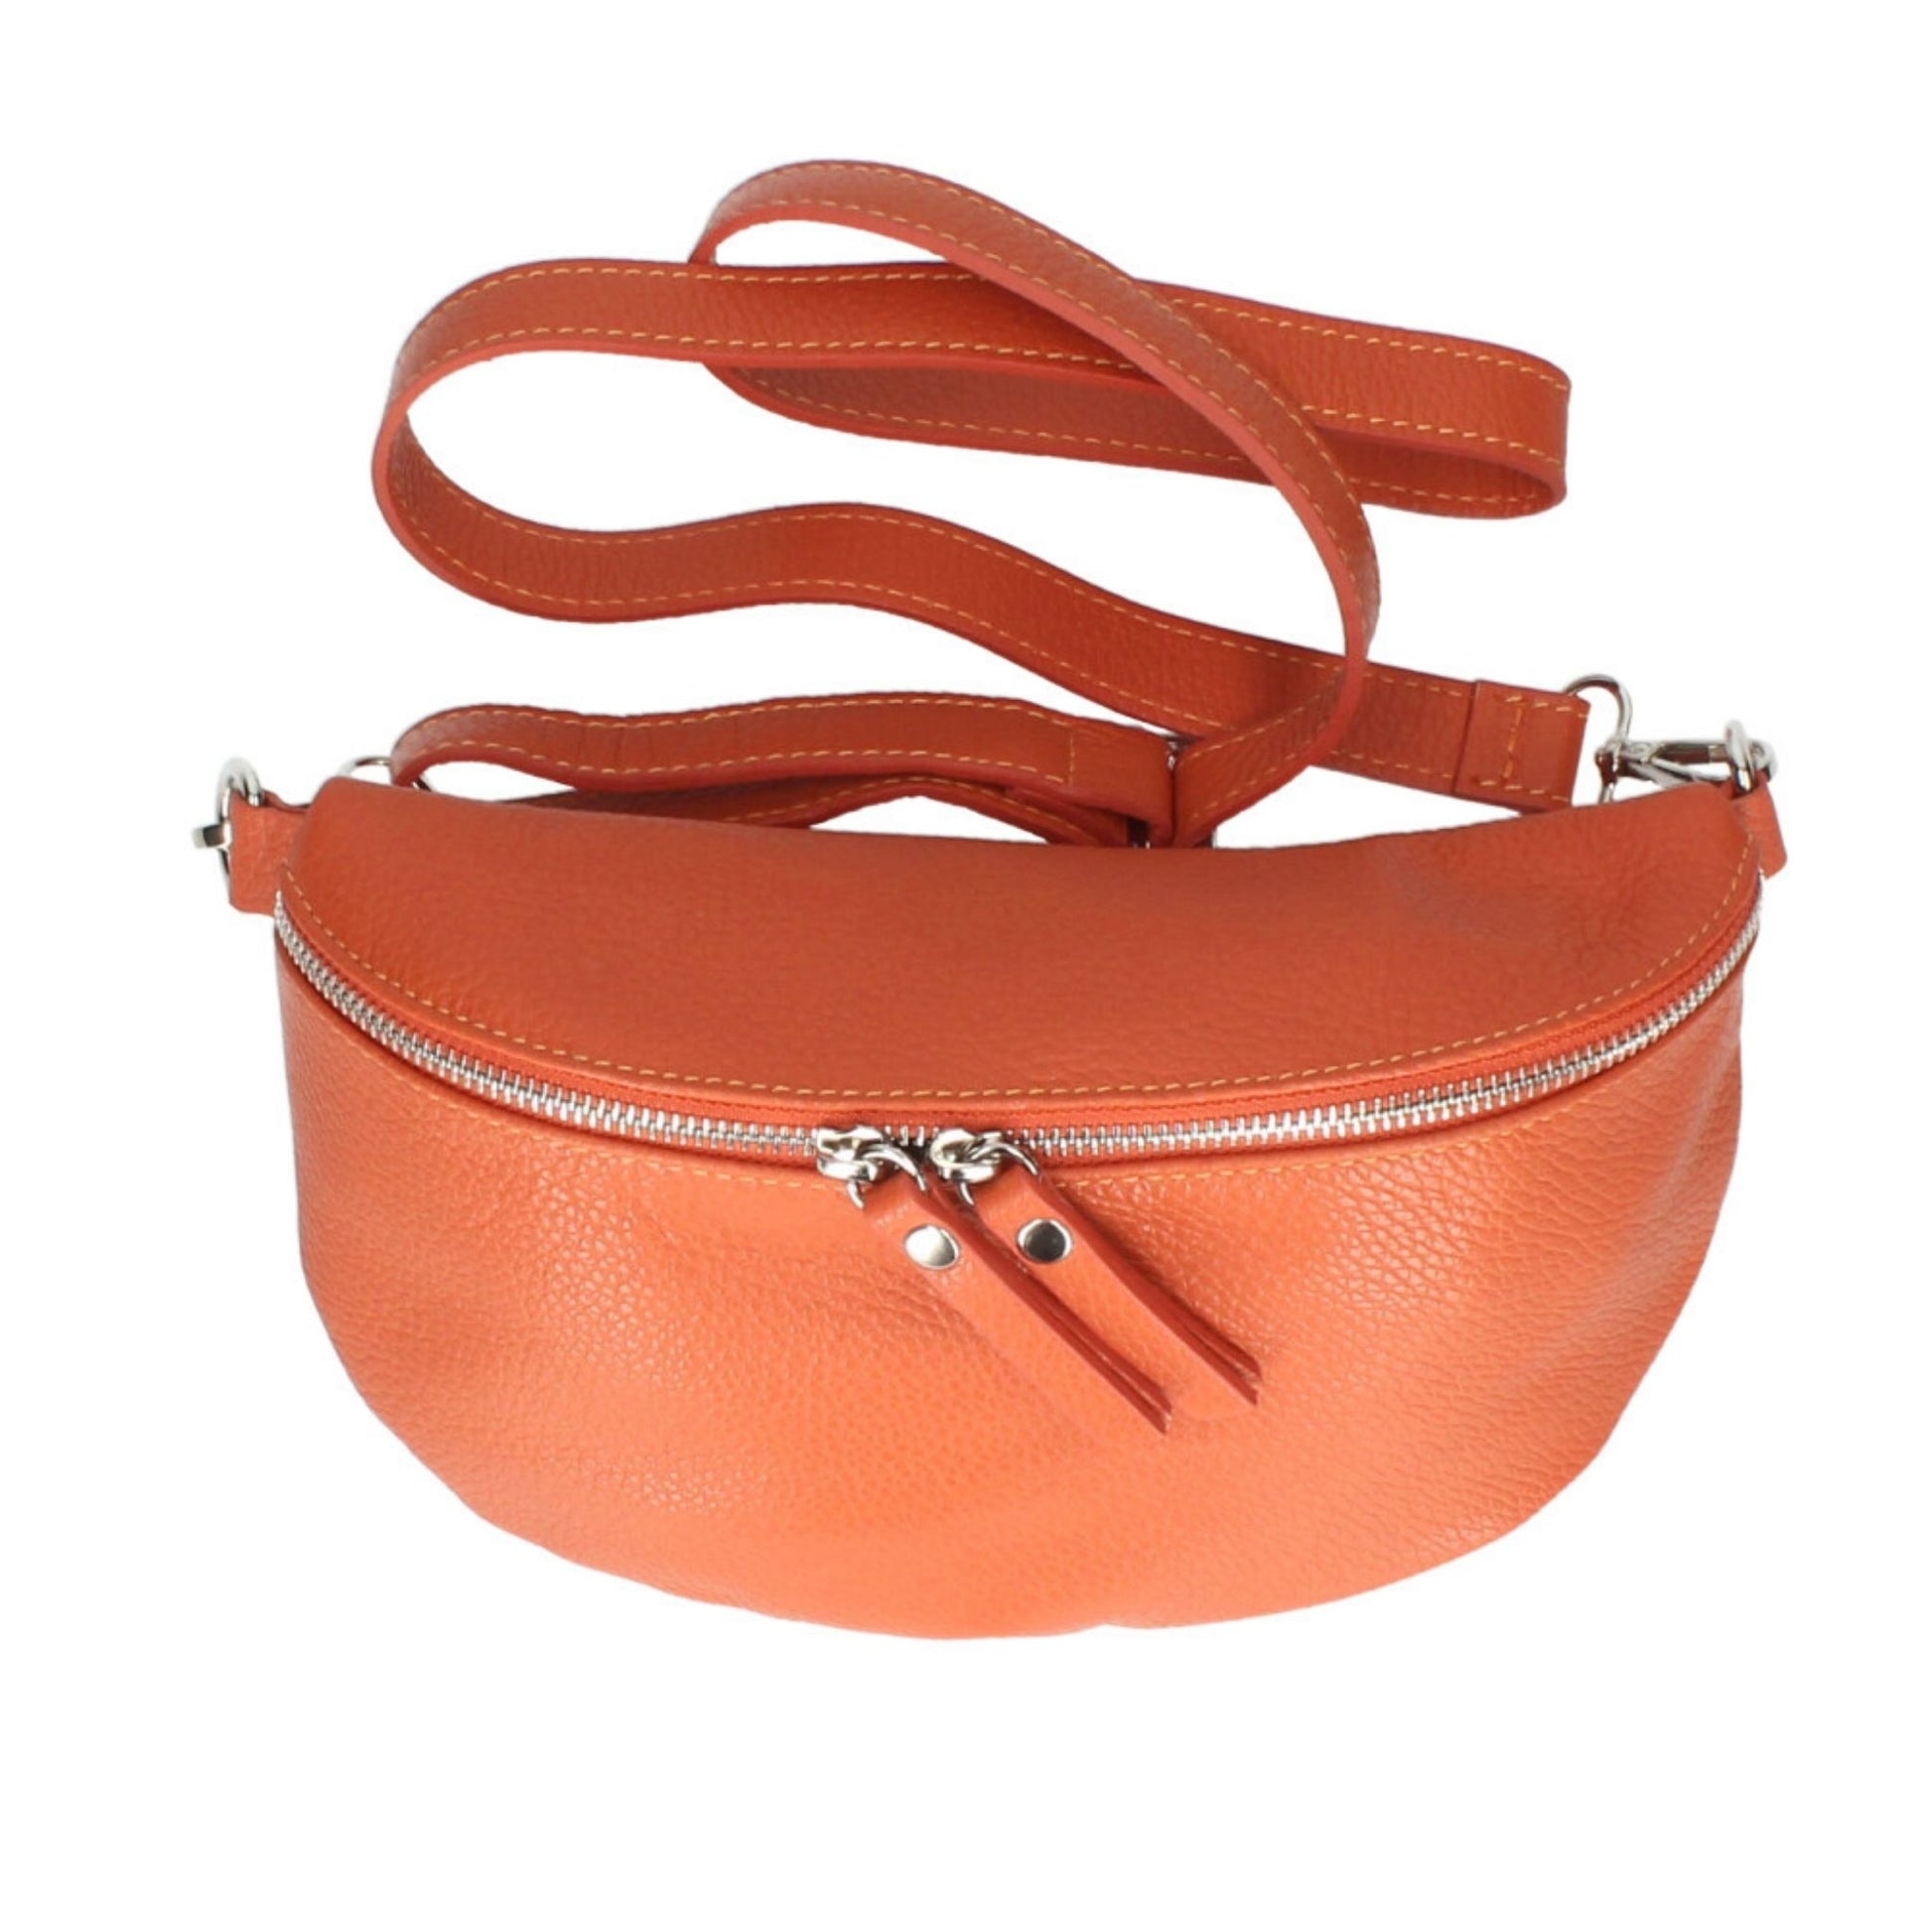 Orange leather bumbag